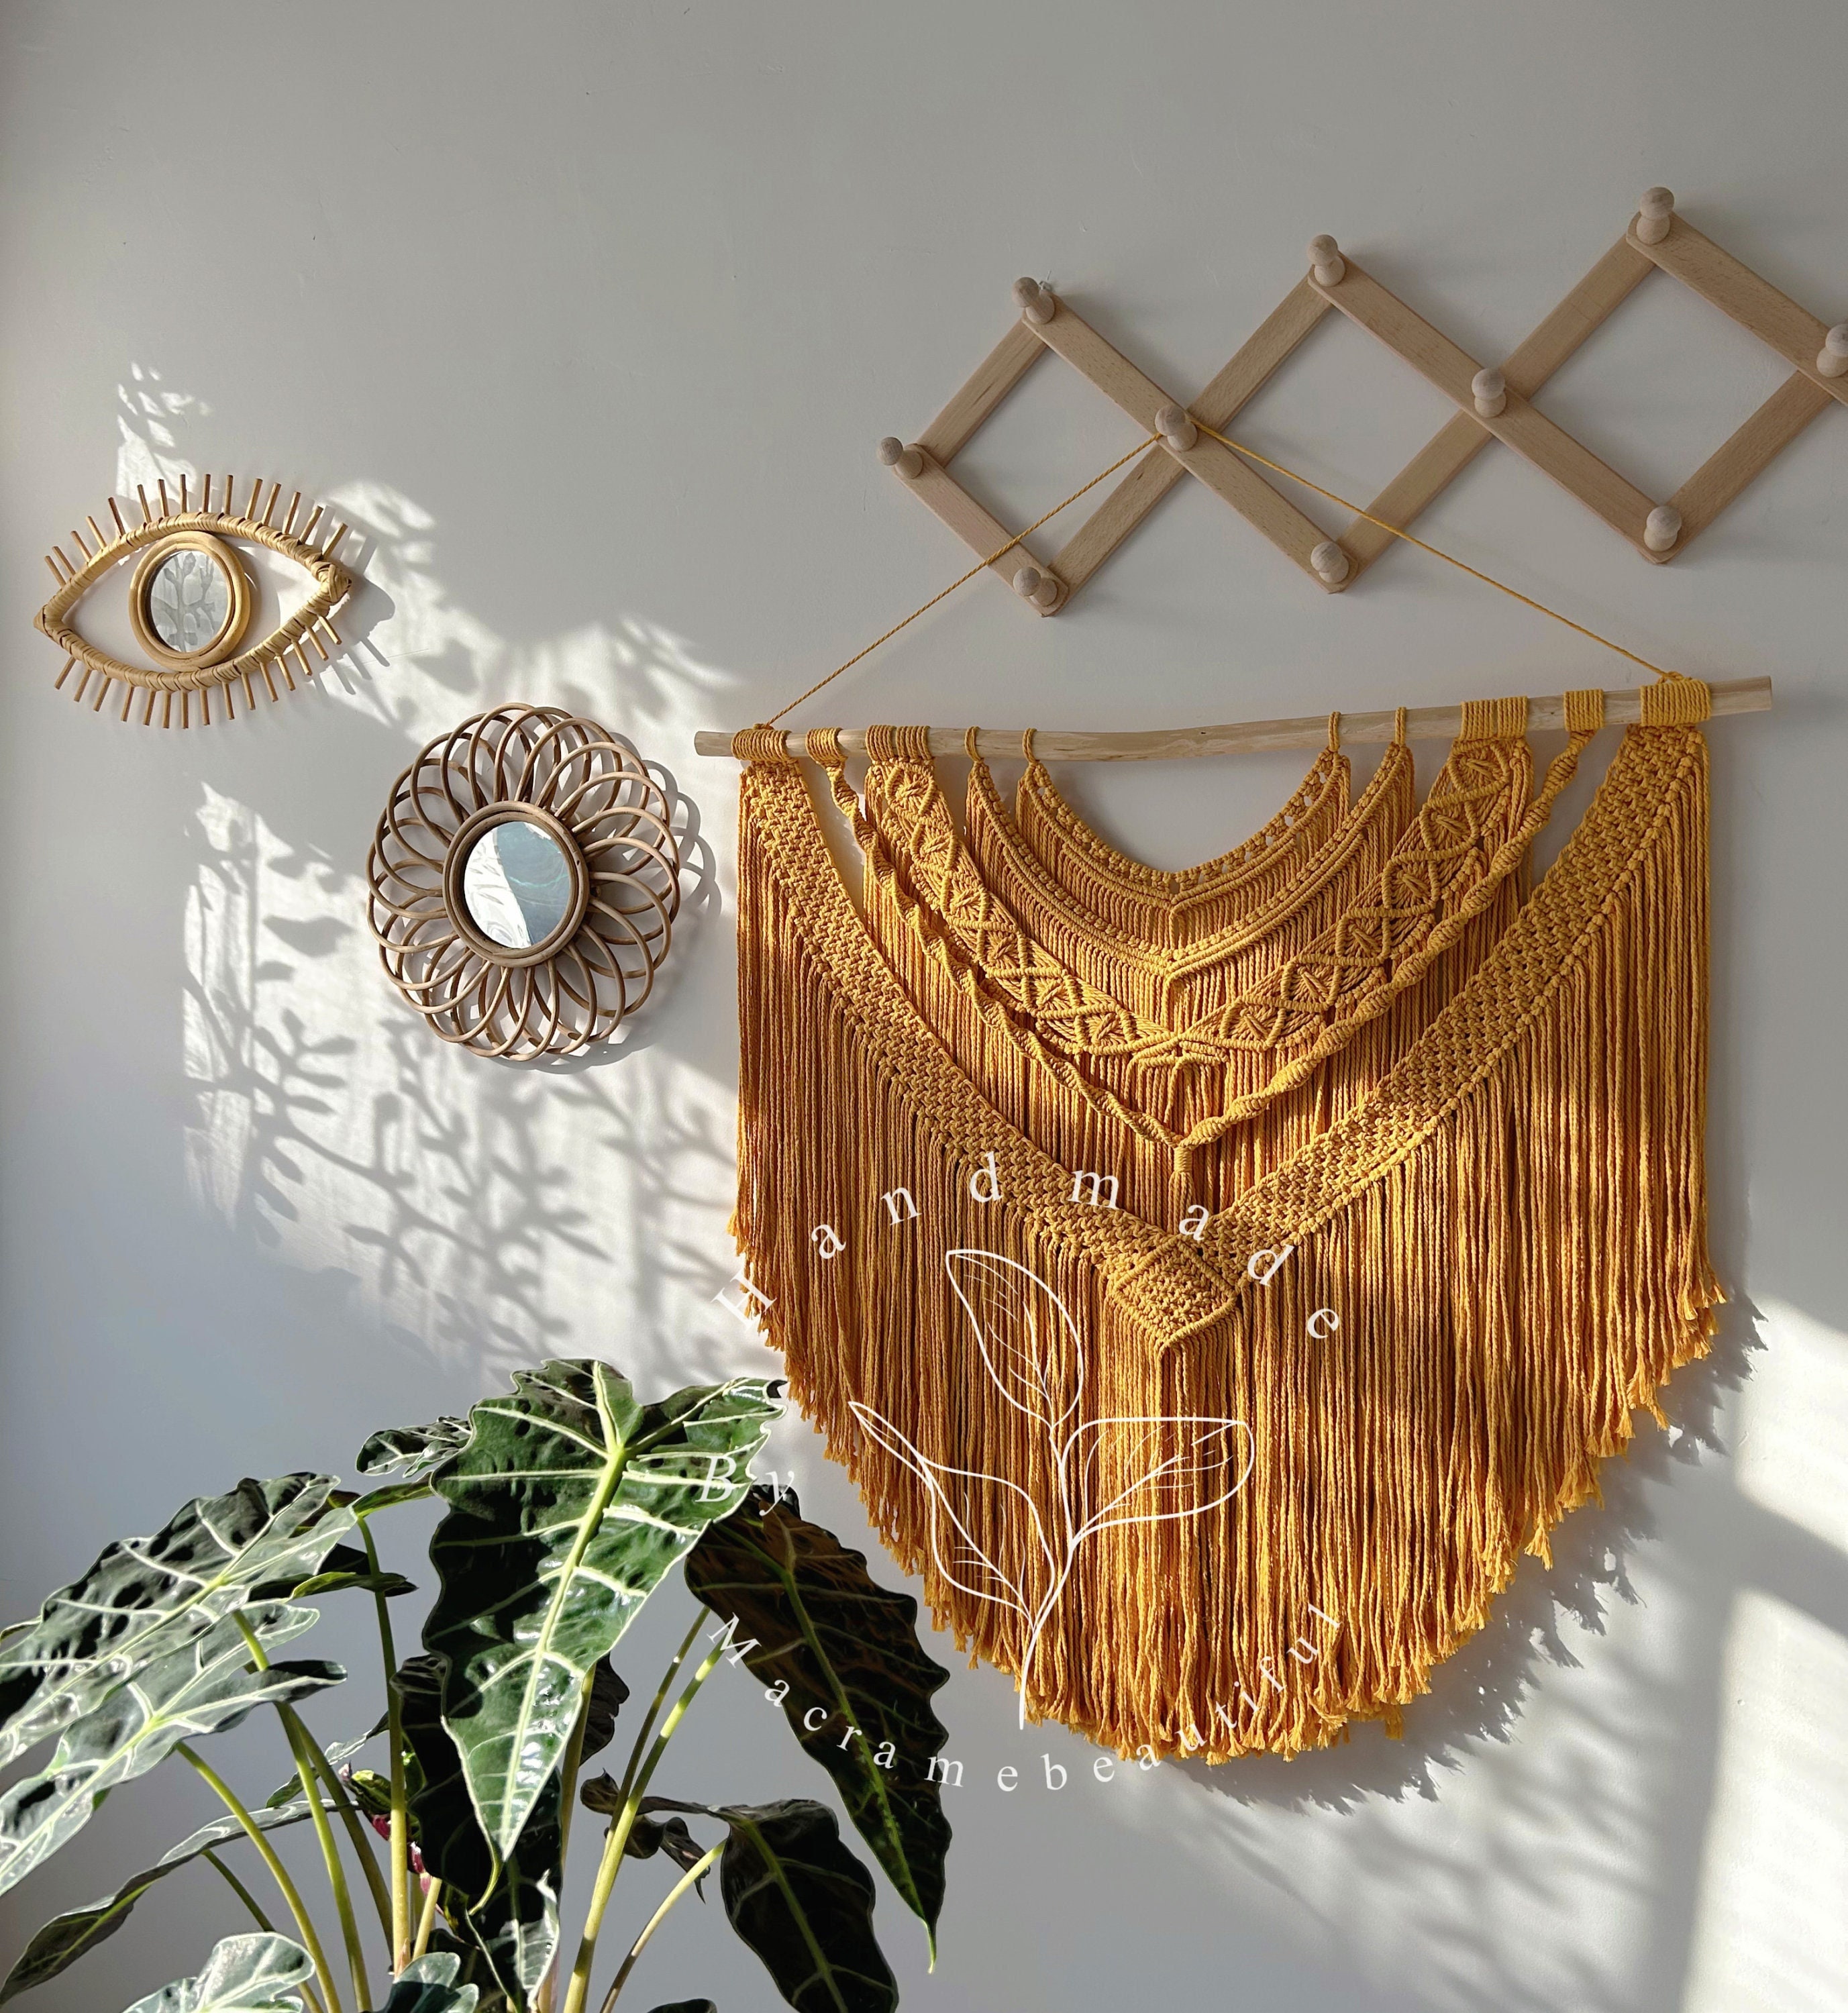 Handmade Earthy Driftwood Wall Hanging Decor with Bells, Yarn and